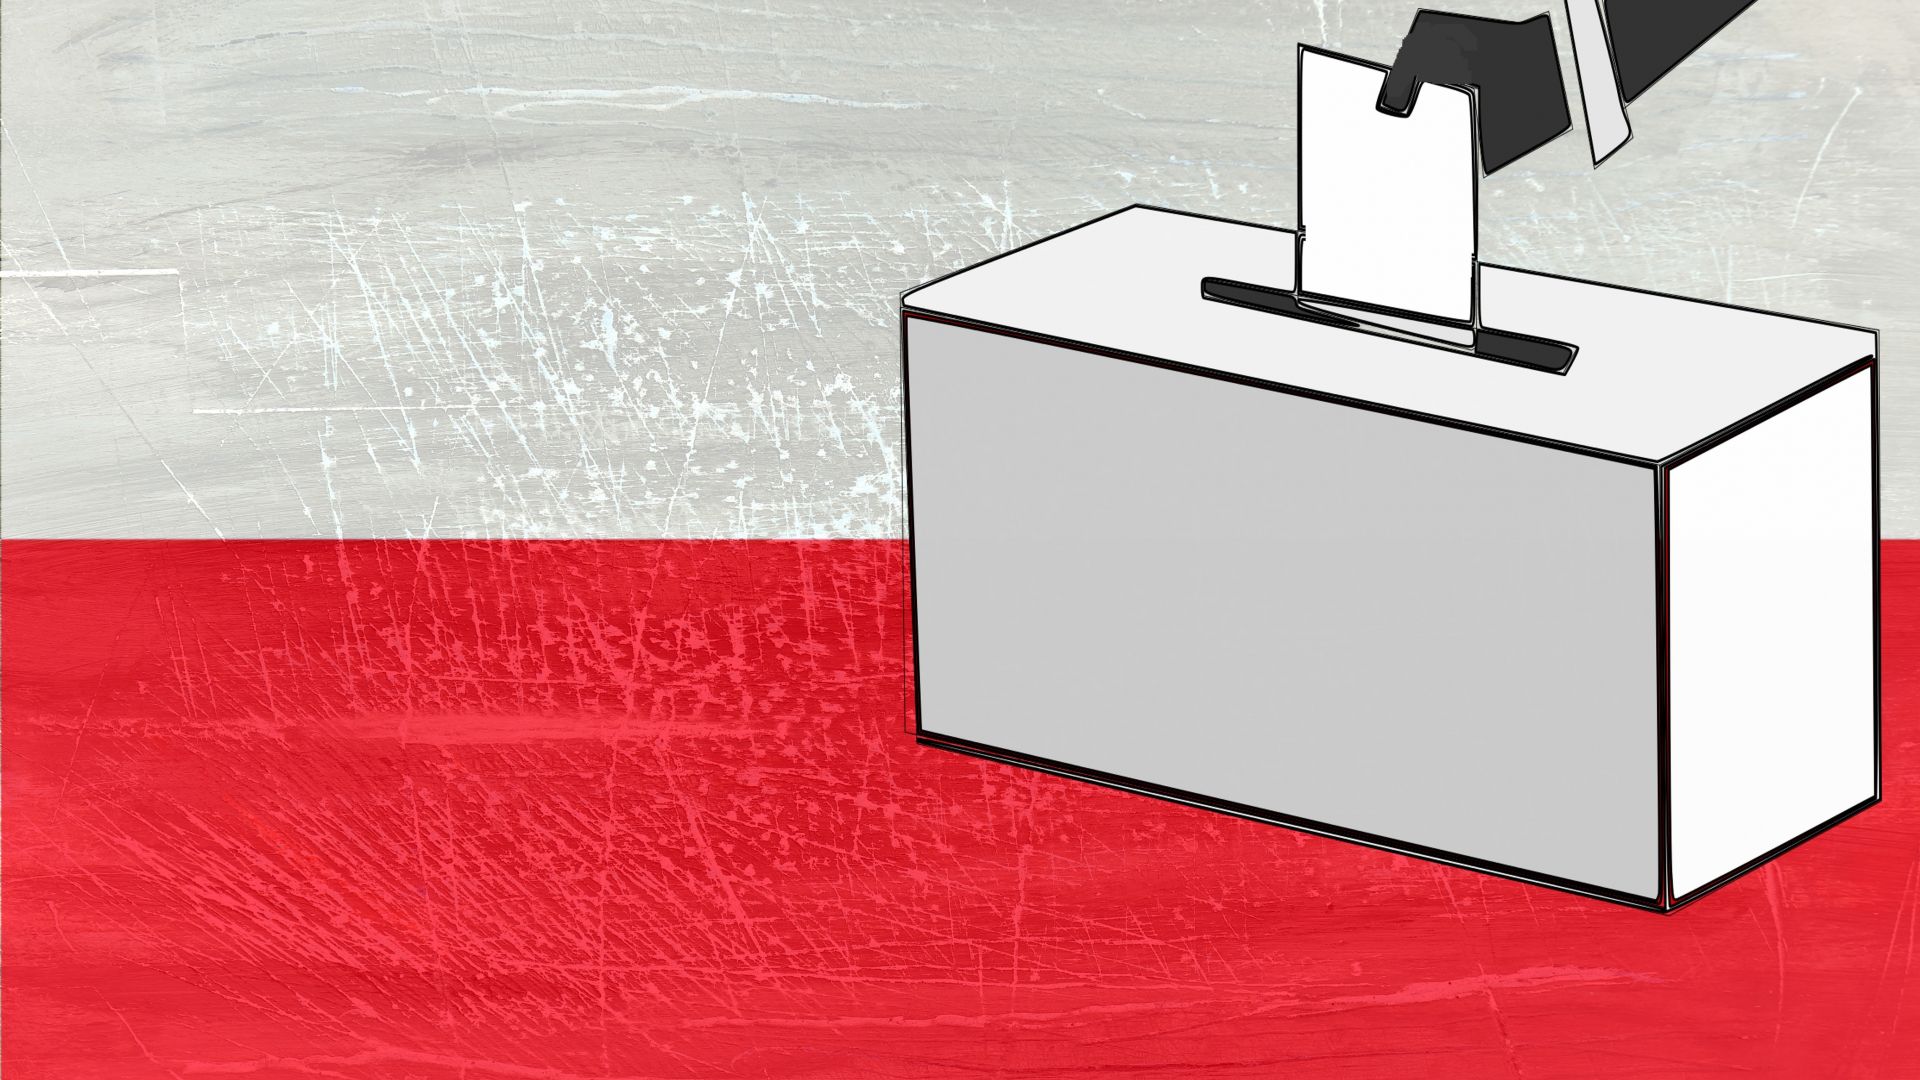 Poland elections